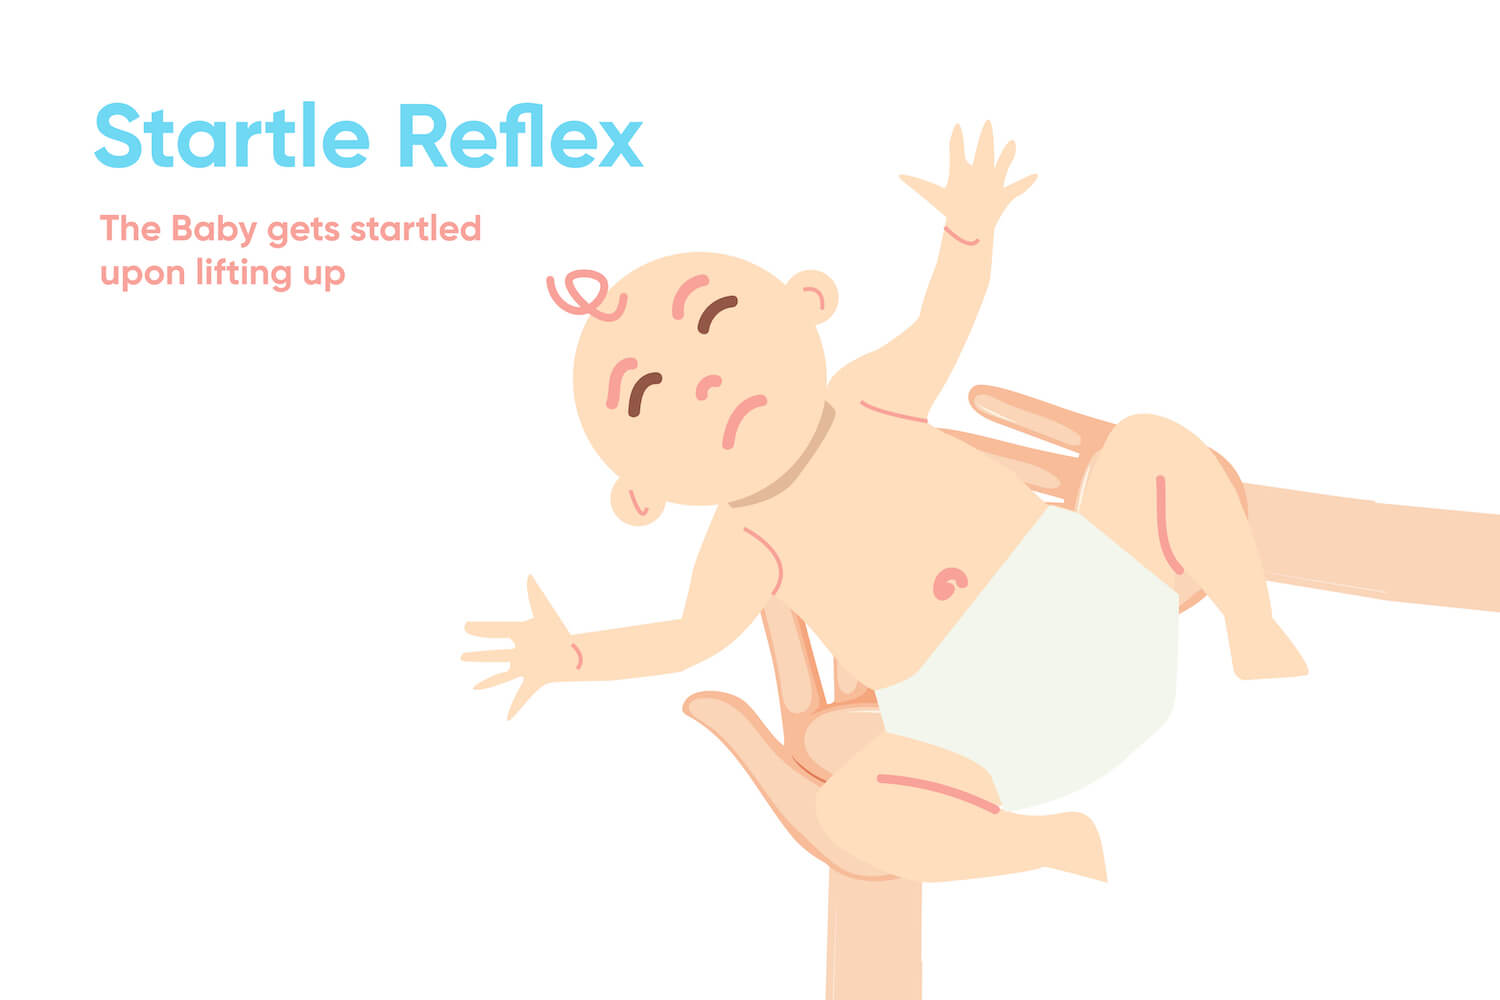 Startle(Moro) Reflex in Babies